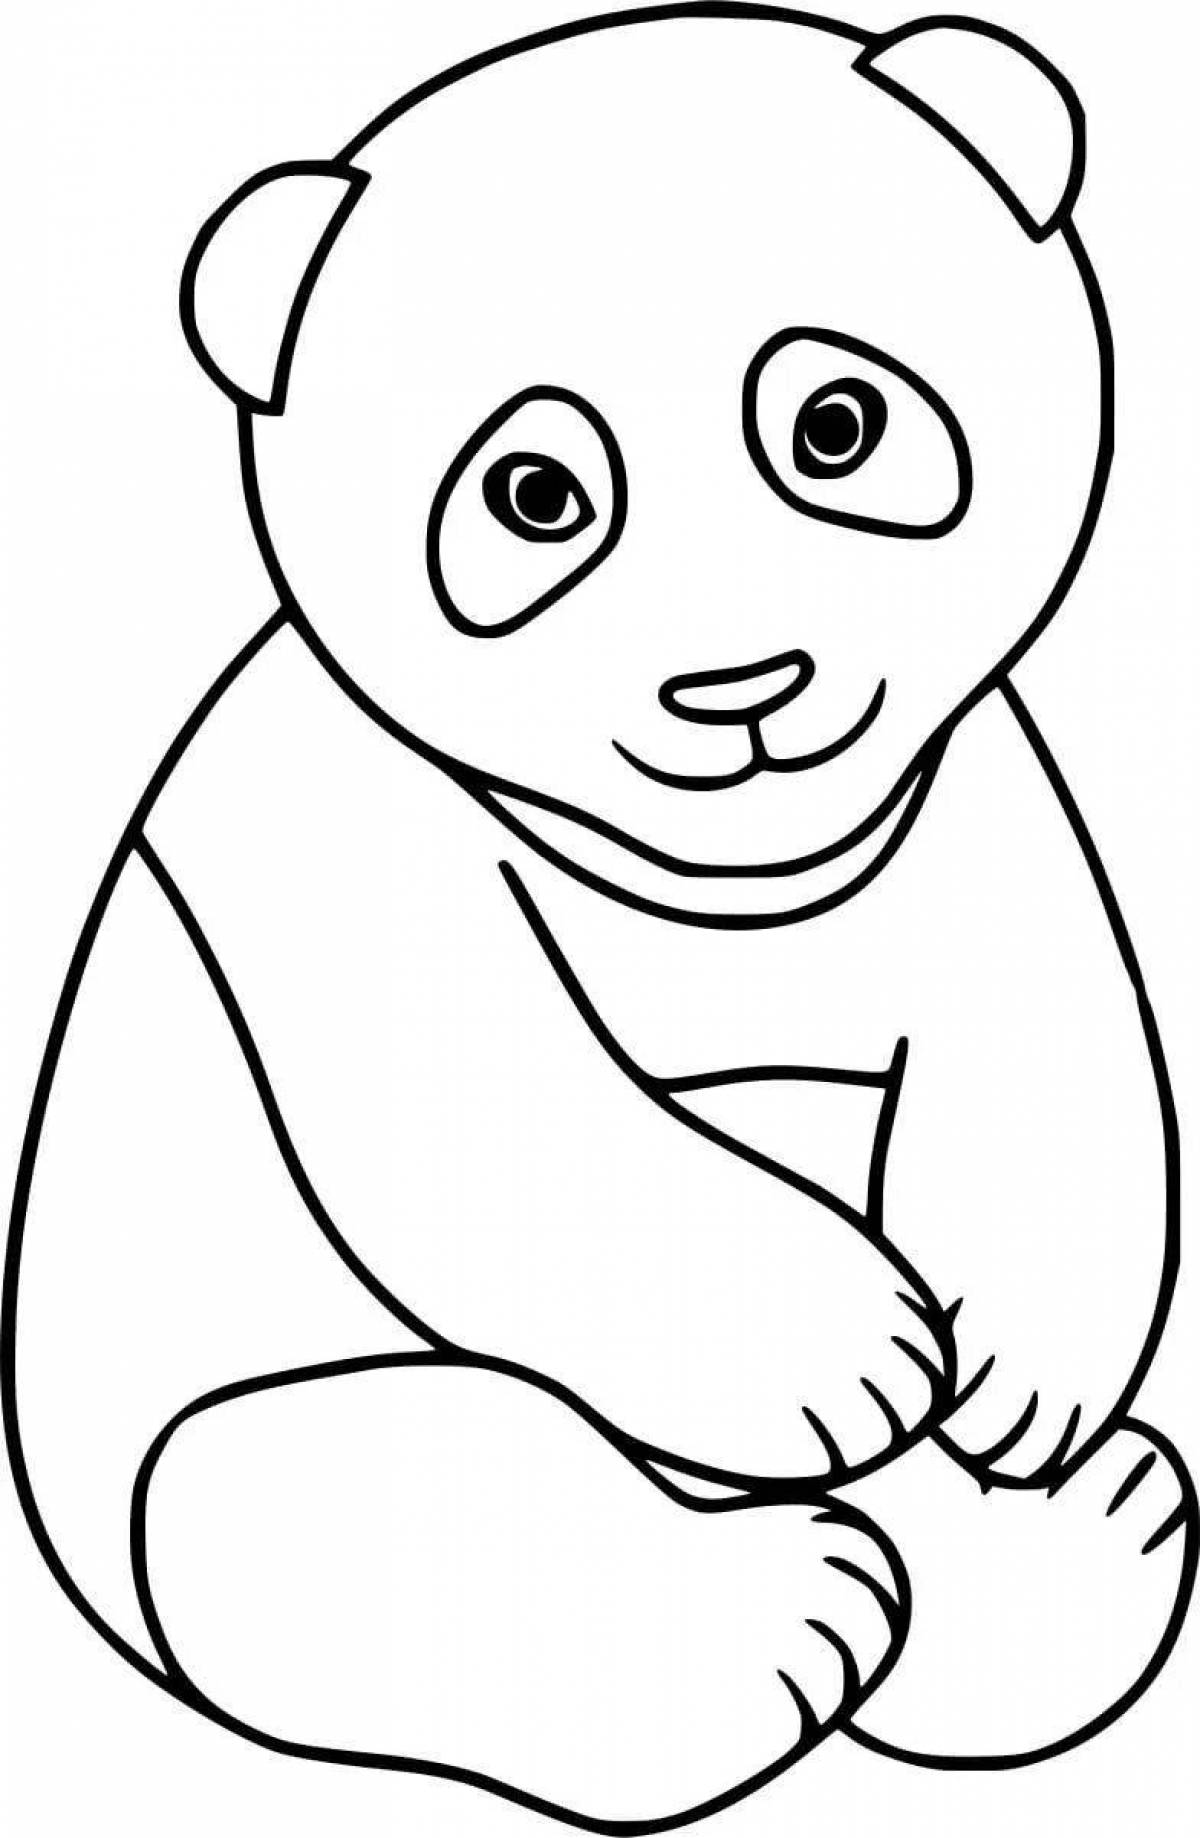 Захватывающая раскраска панда для детей